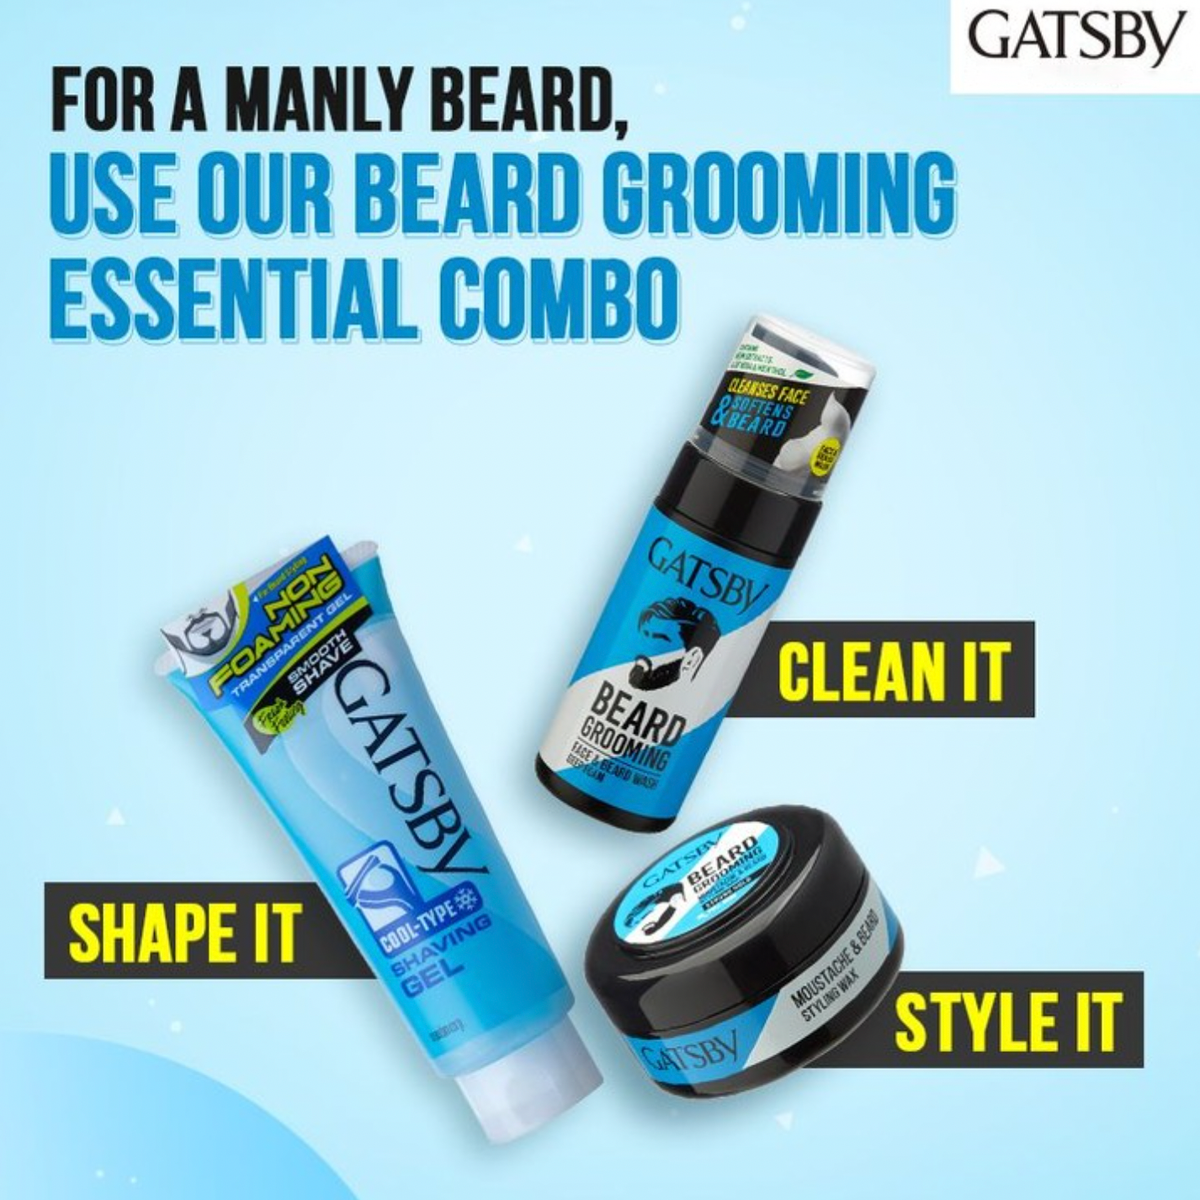 Gatsby Moustache & Beard Styling Wax - Strong Hold, 25g Gardenia Cosmotrade LLP